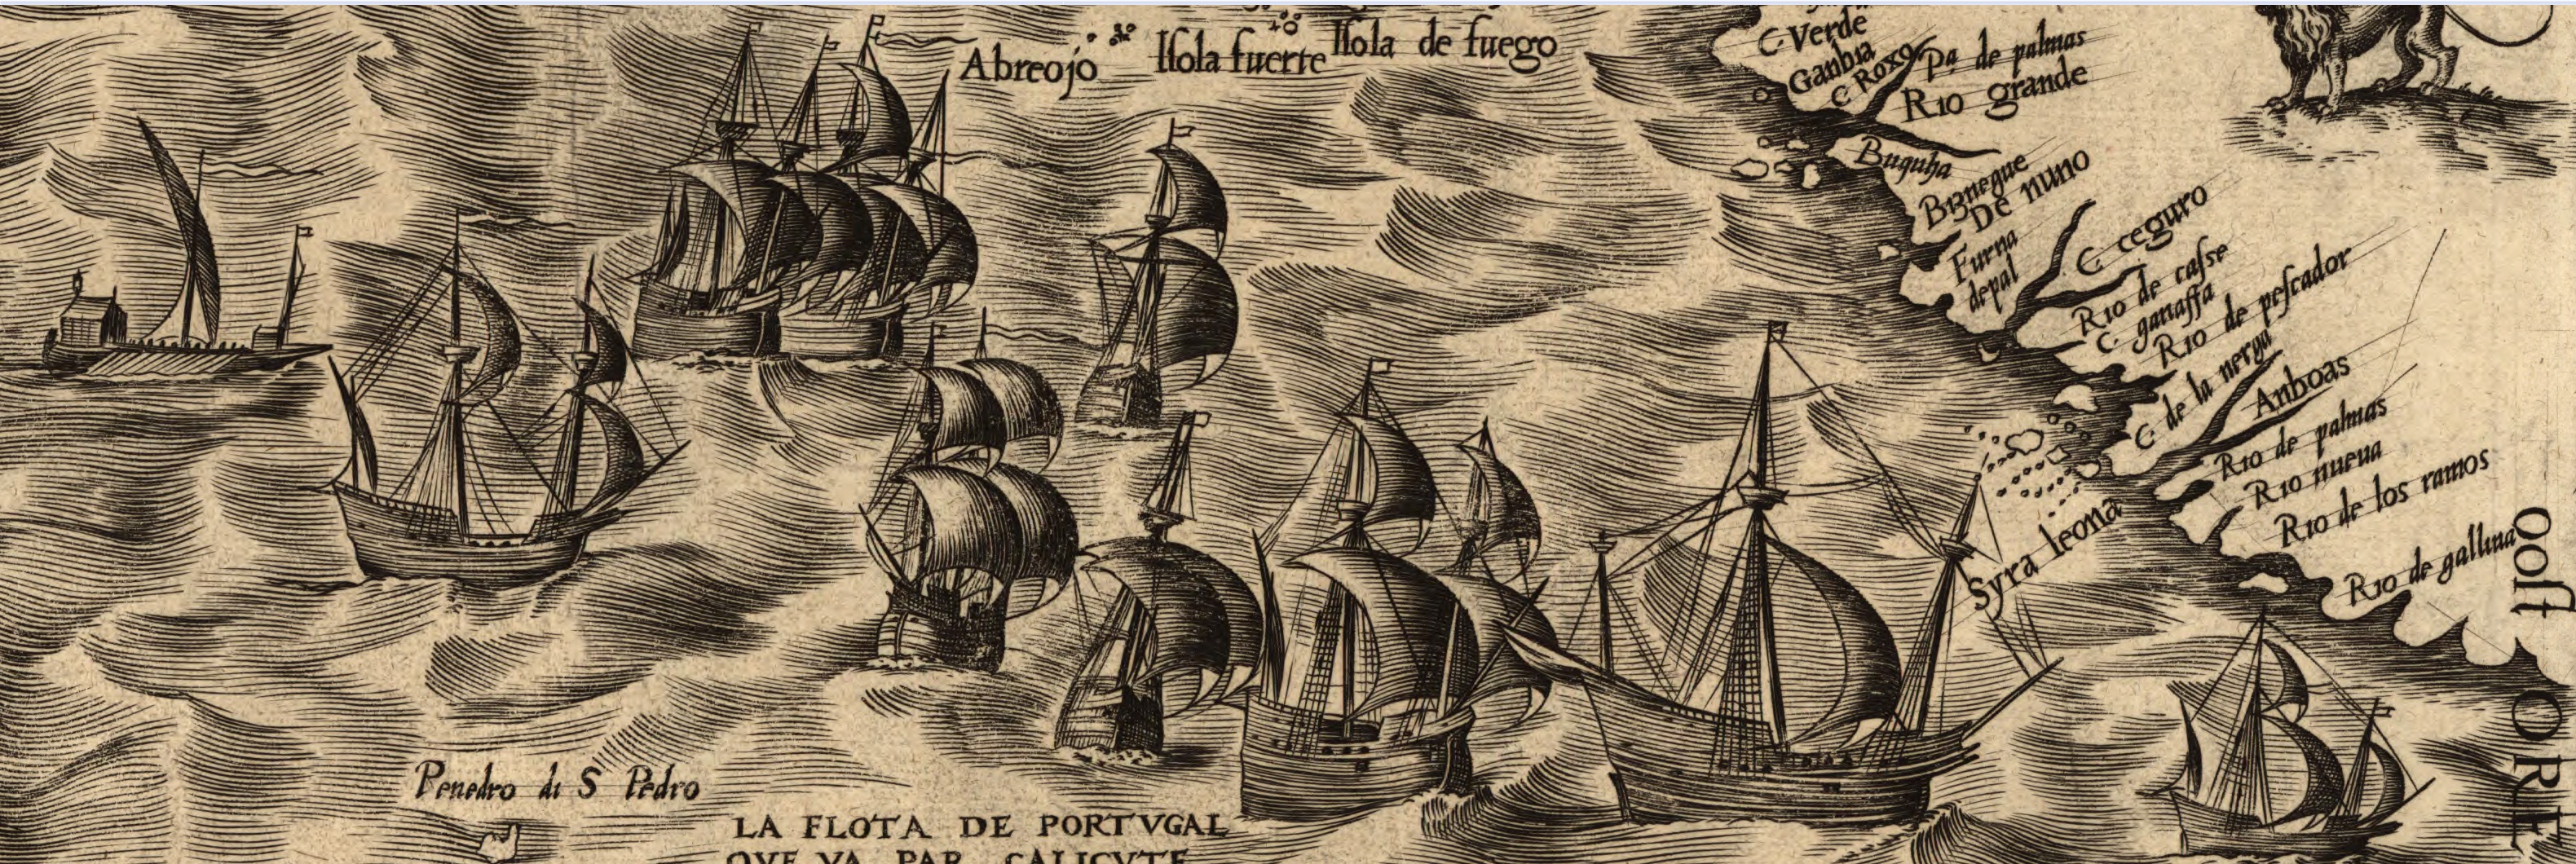 1562 Americae-Gutierrez 08 03hrs-mid La-Flota-de-Portugal